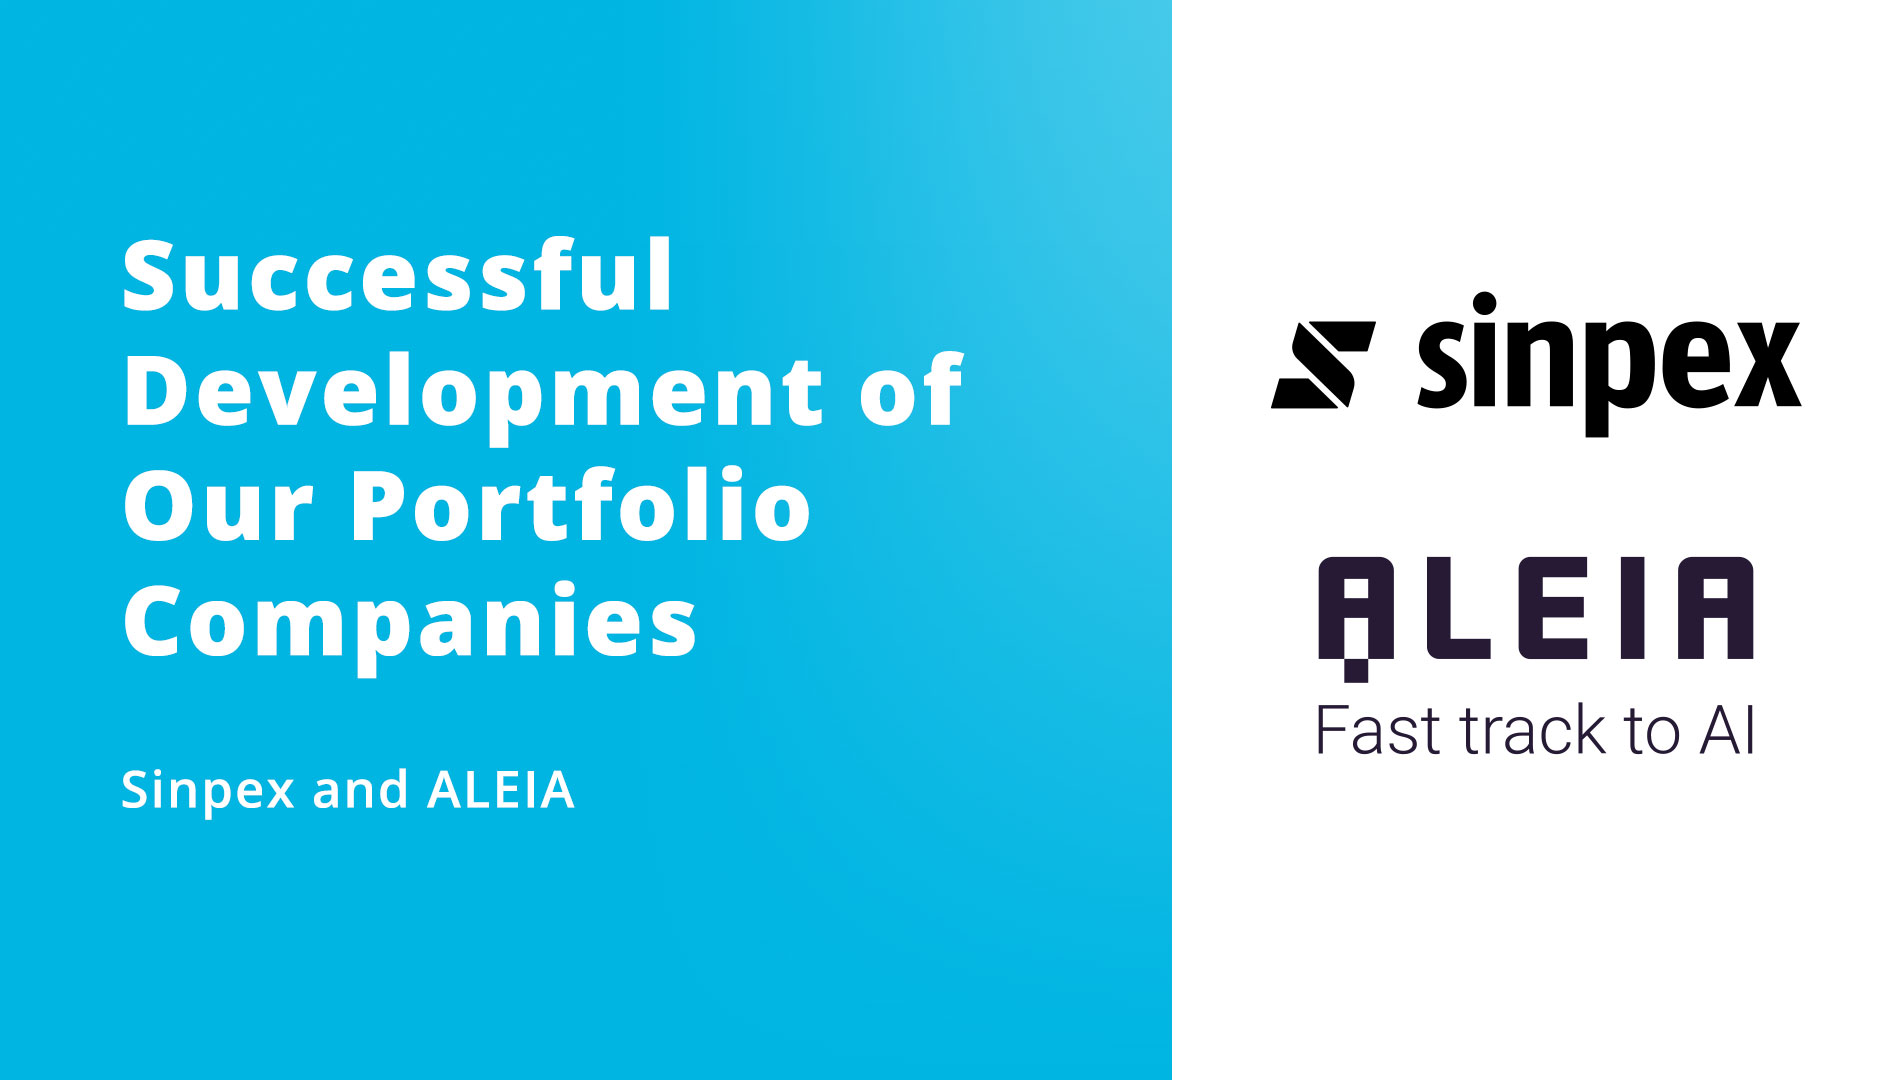 Successful development of our portfolio companies Sinpex and ALEIA